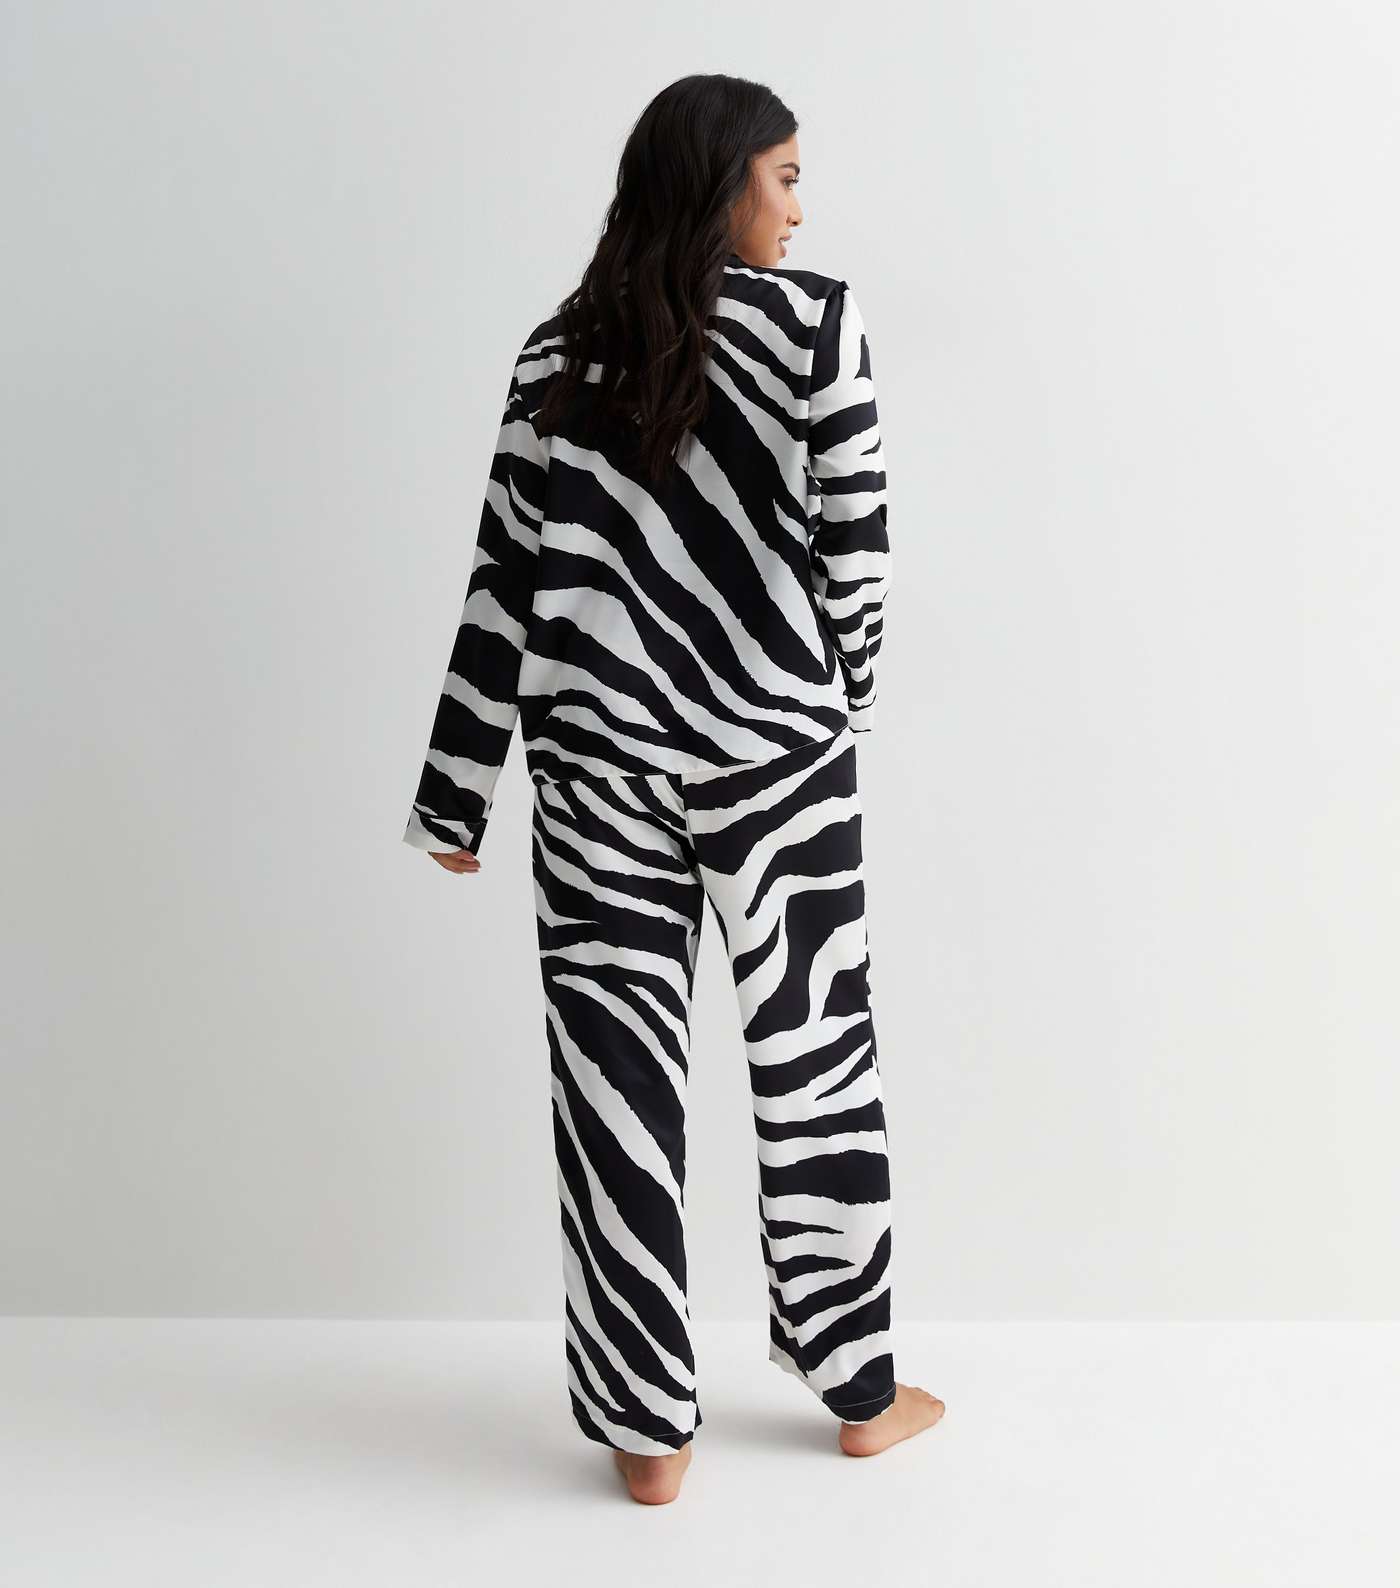 Petite White Satin Trouser Pyjama Set with Zebra Print Image 4